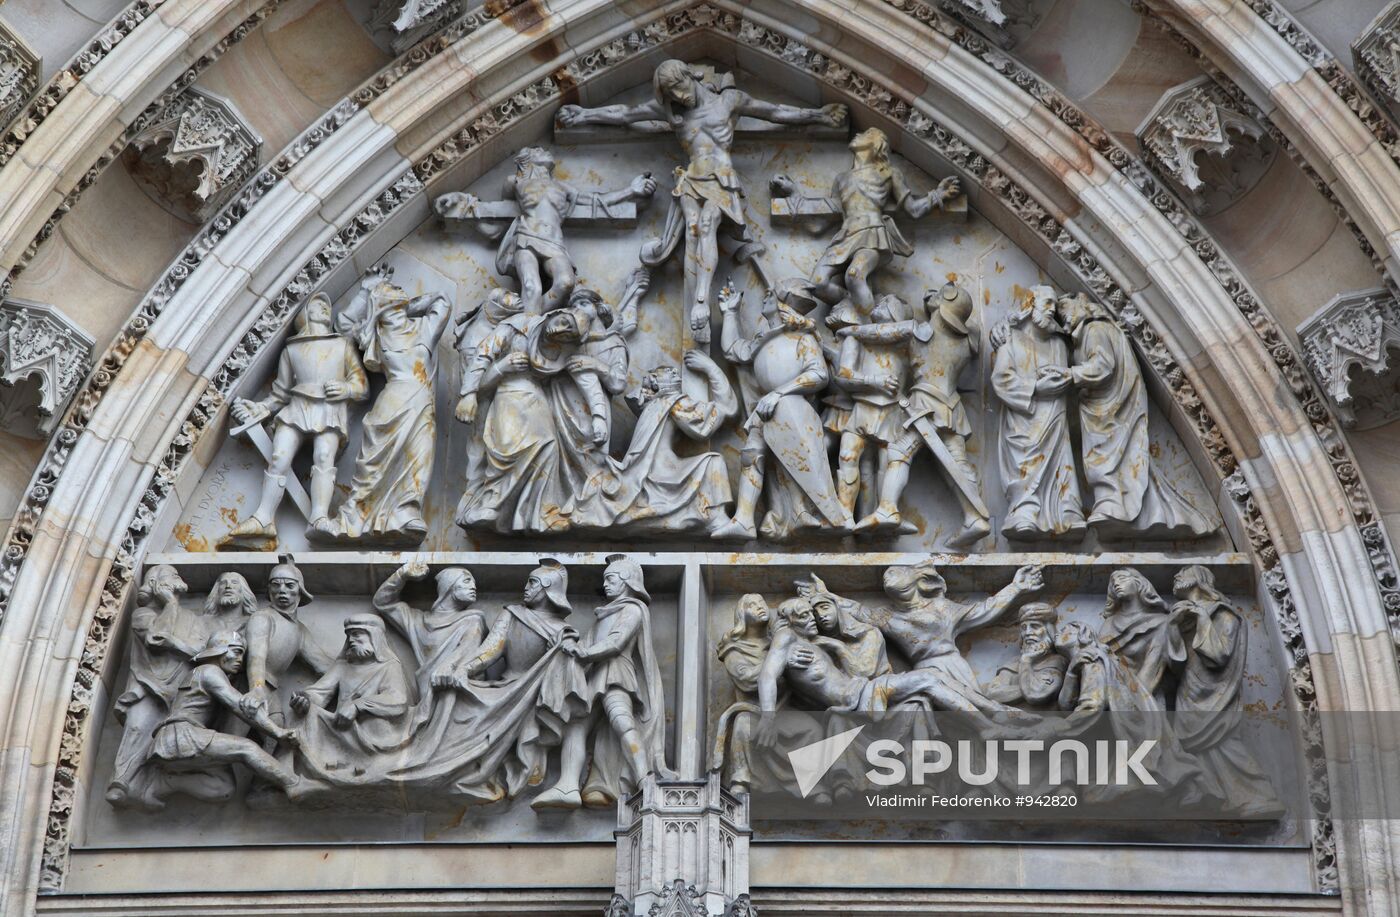 St. Vitus, St. Wenceslas and St. Adalbert Cathedral in Prague